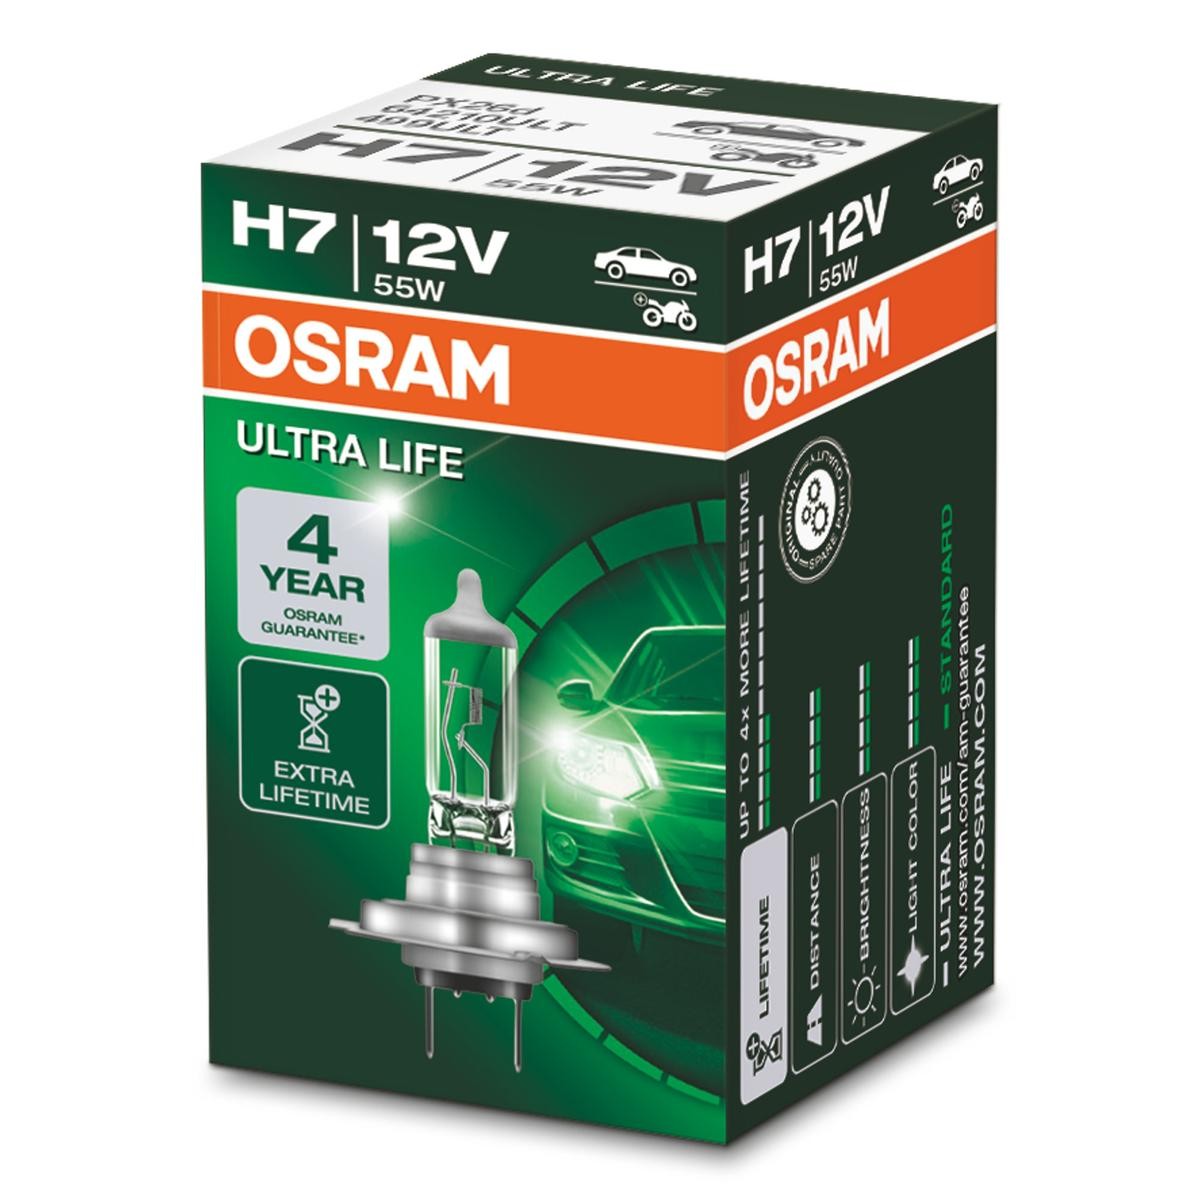 H7 OSRAM ULTRA LIFE H7 12V 55W PX26d, 3200K, Halogen High beam bulb 64210ULT buy